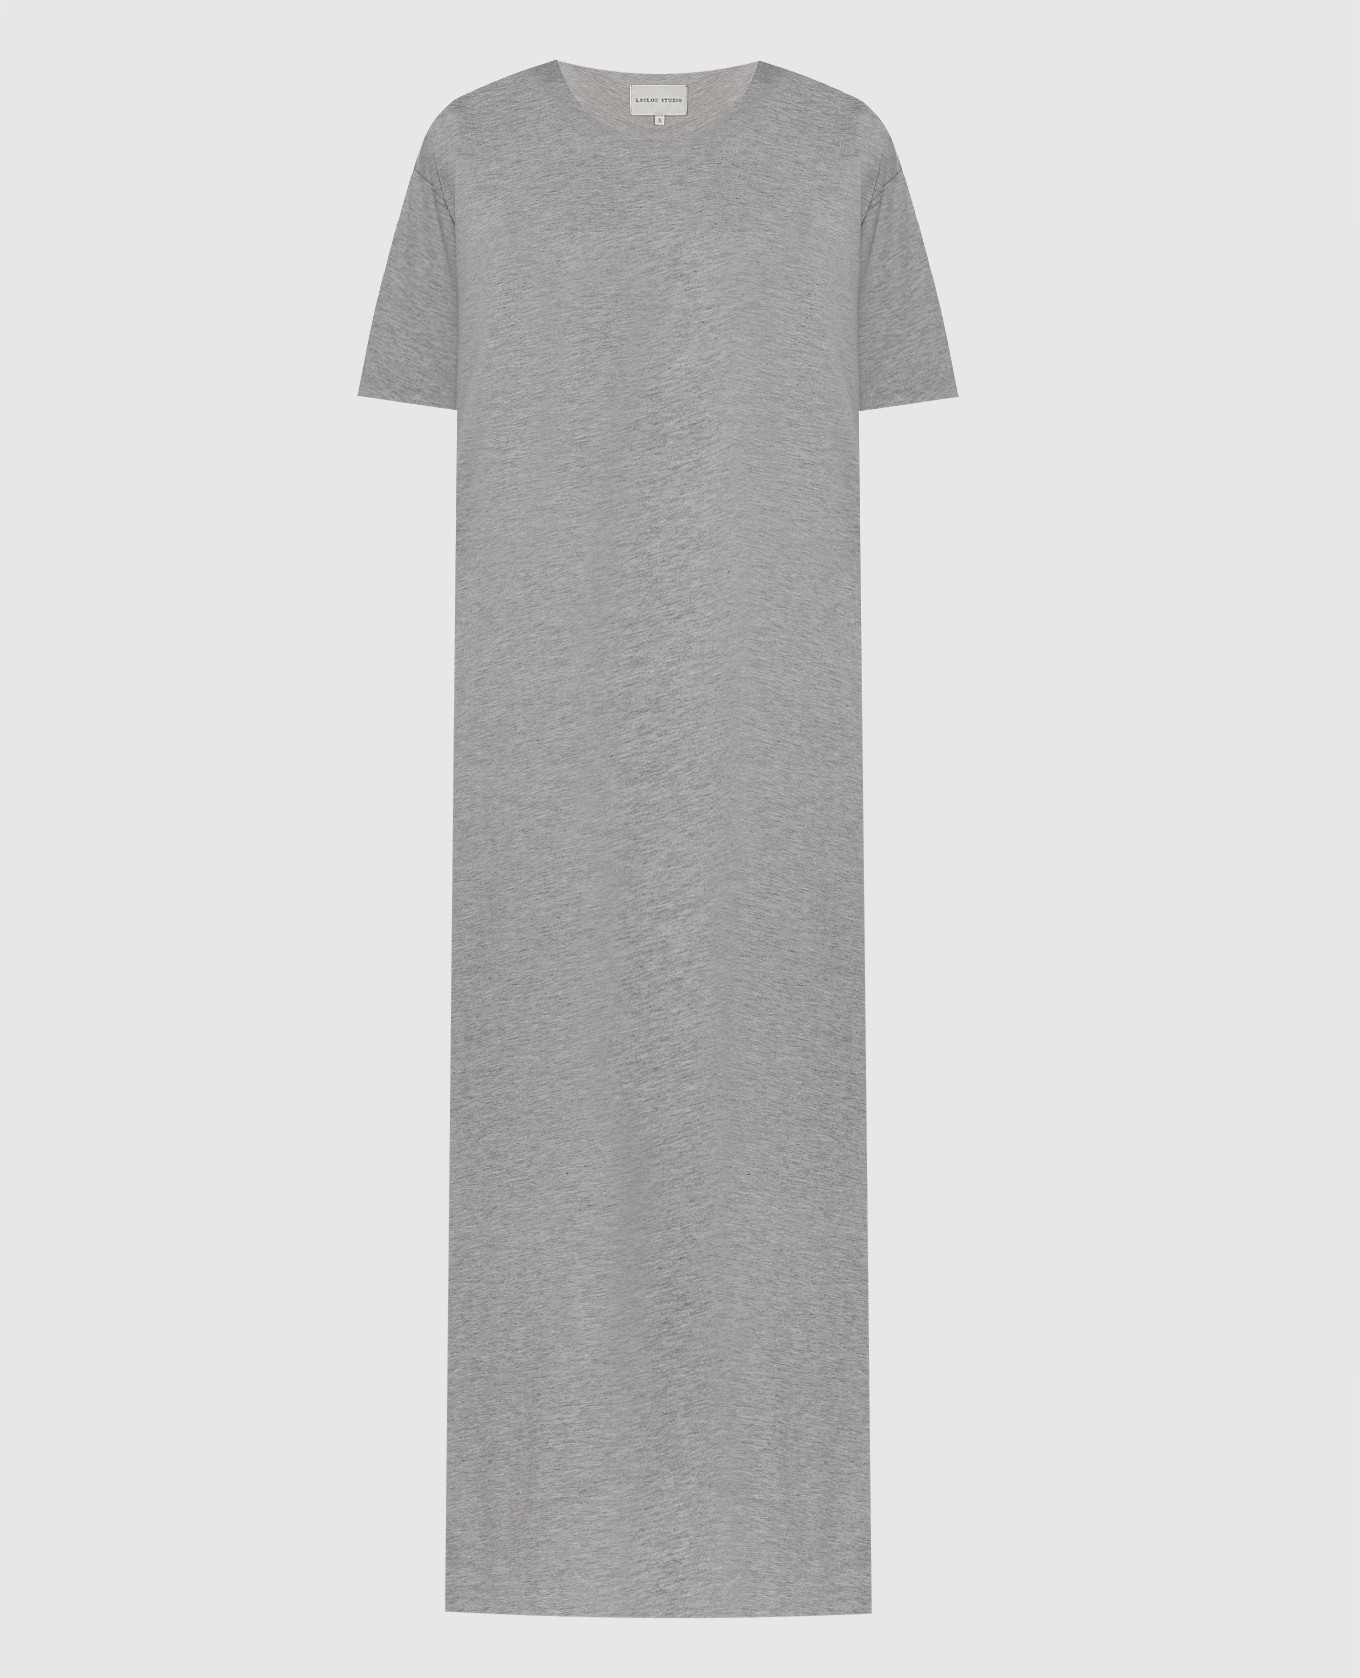 SARUE gray melange midi dress with logo embroidery